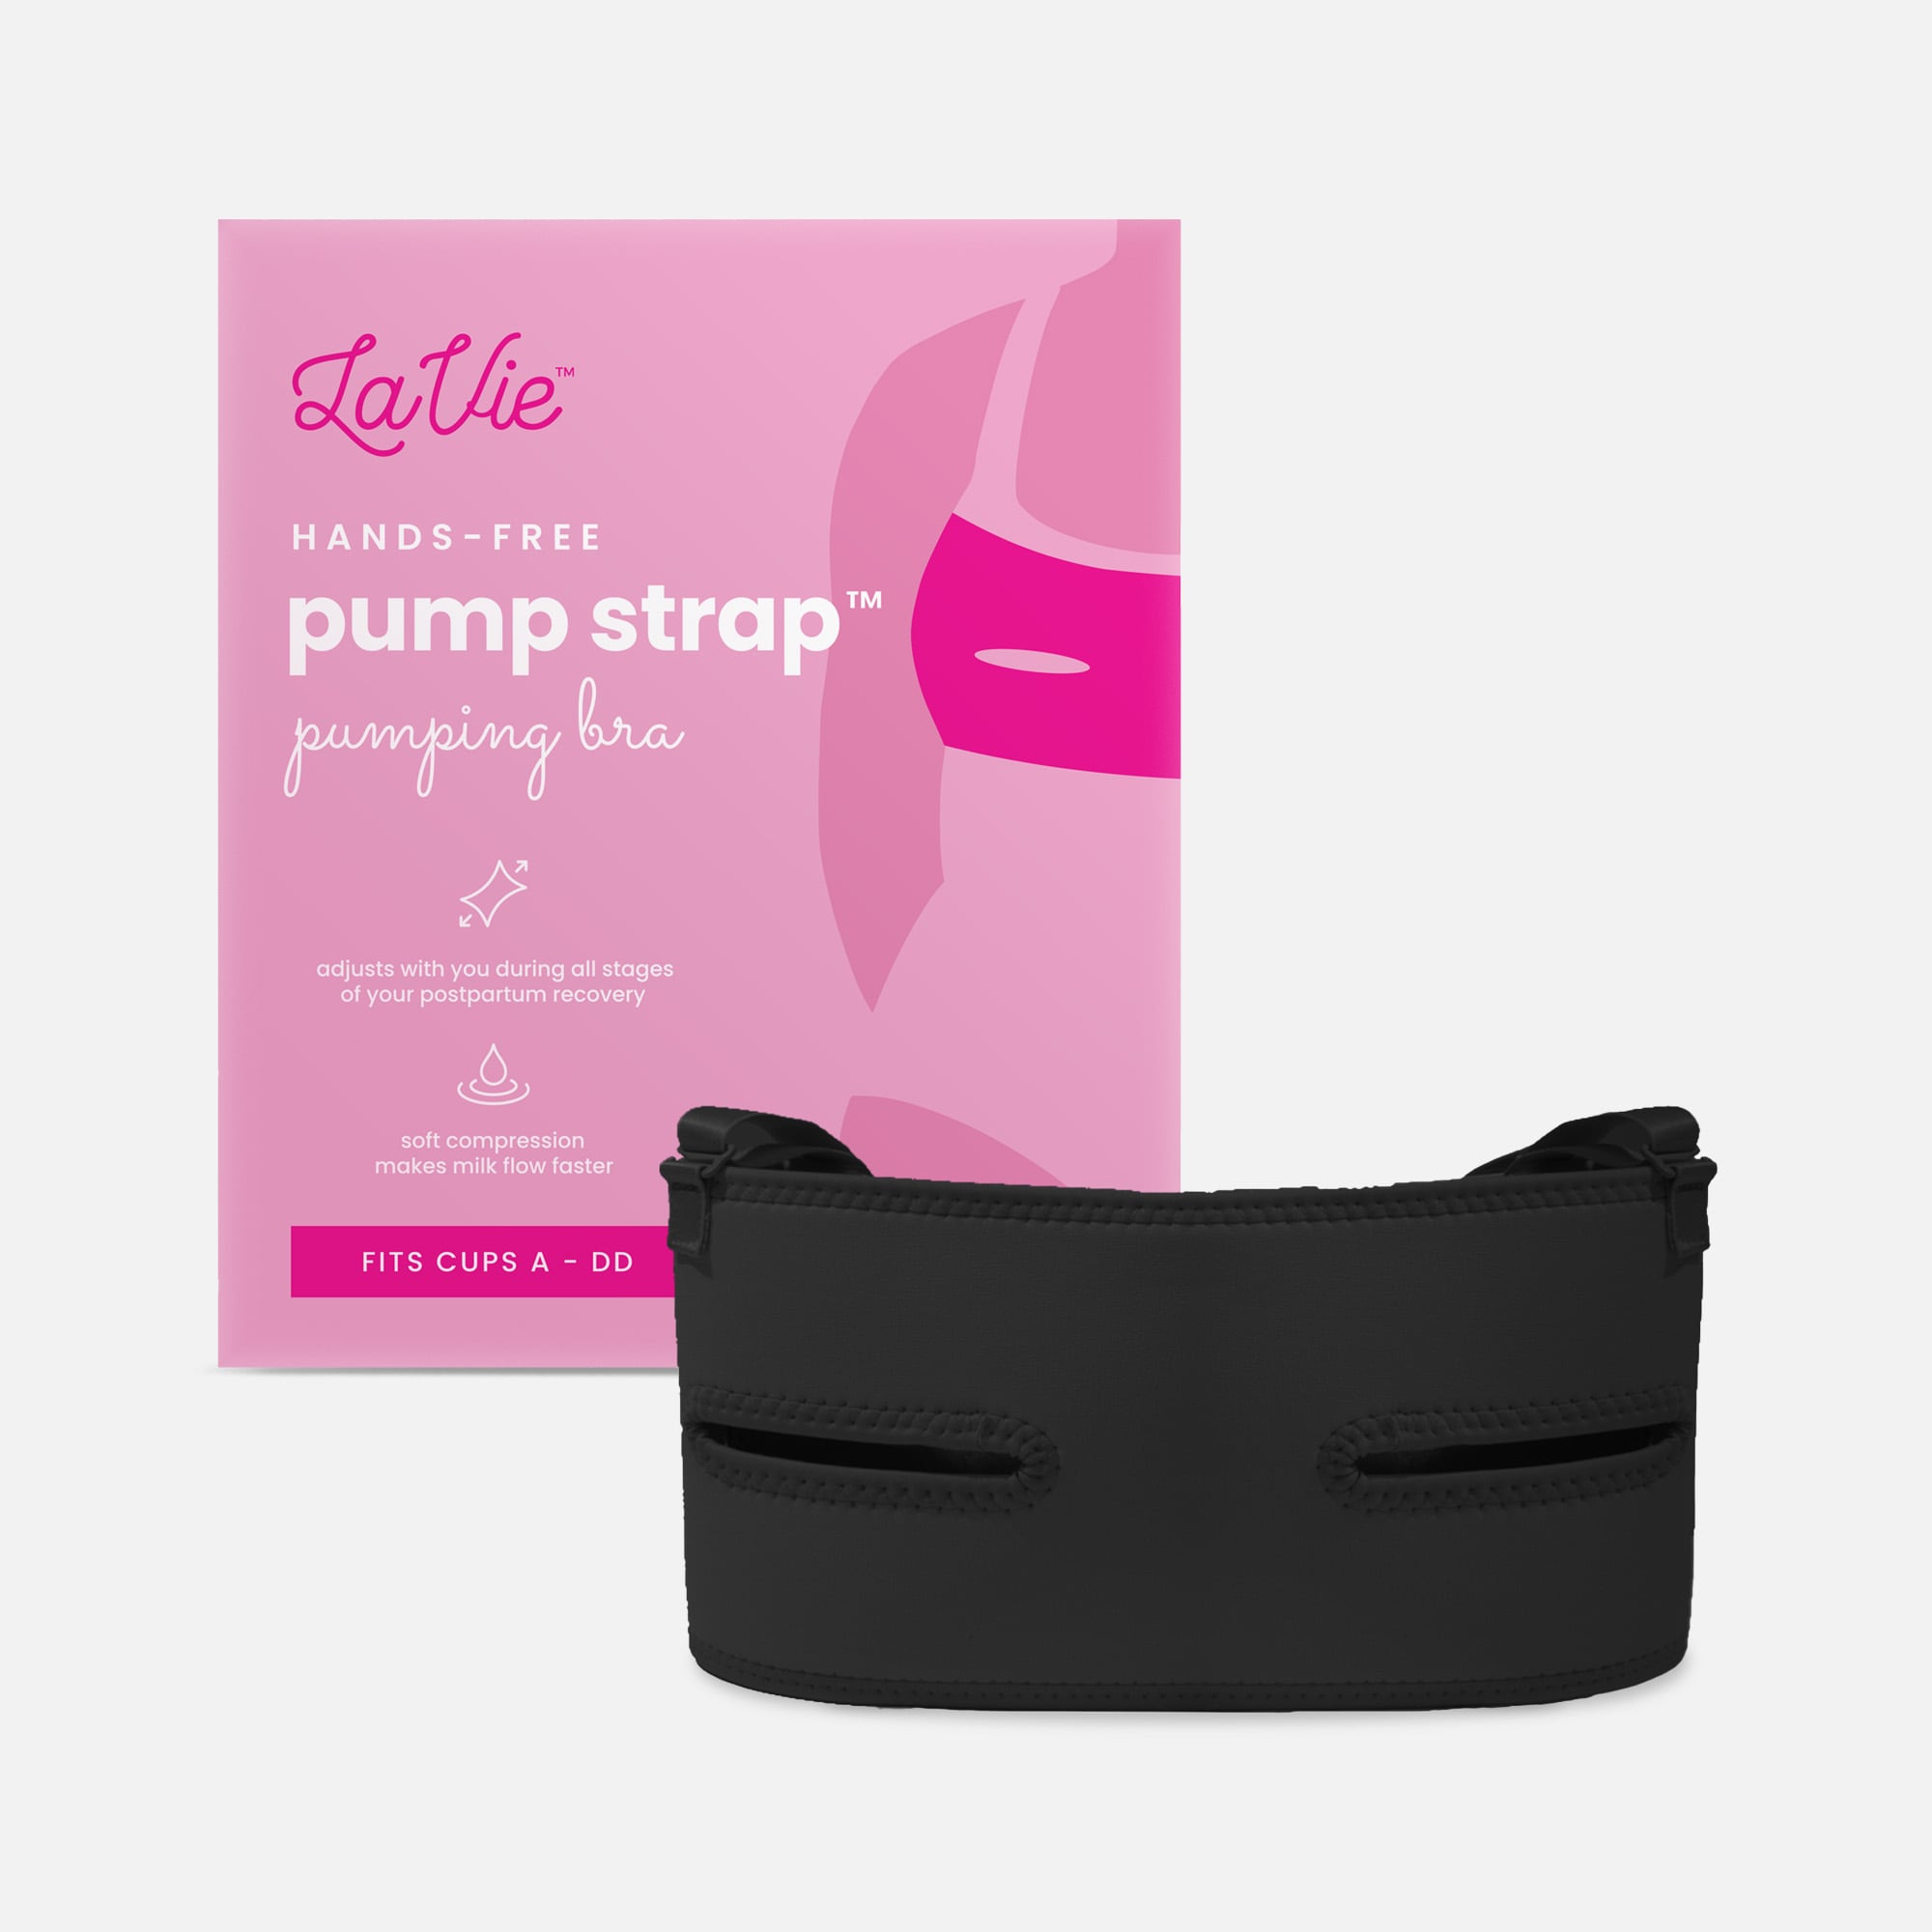 HSA Eligible  LaVie Pump Strap Hands-Free Pumping & Nursing Bra, Black